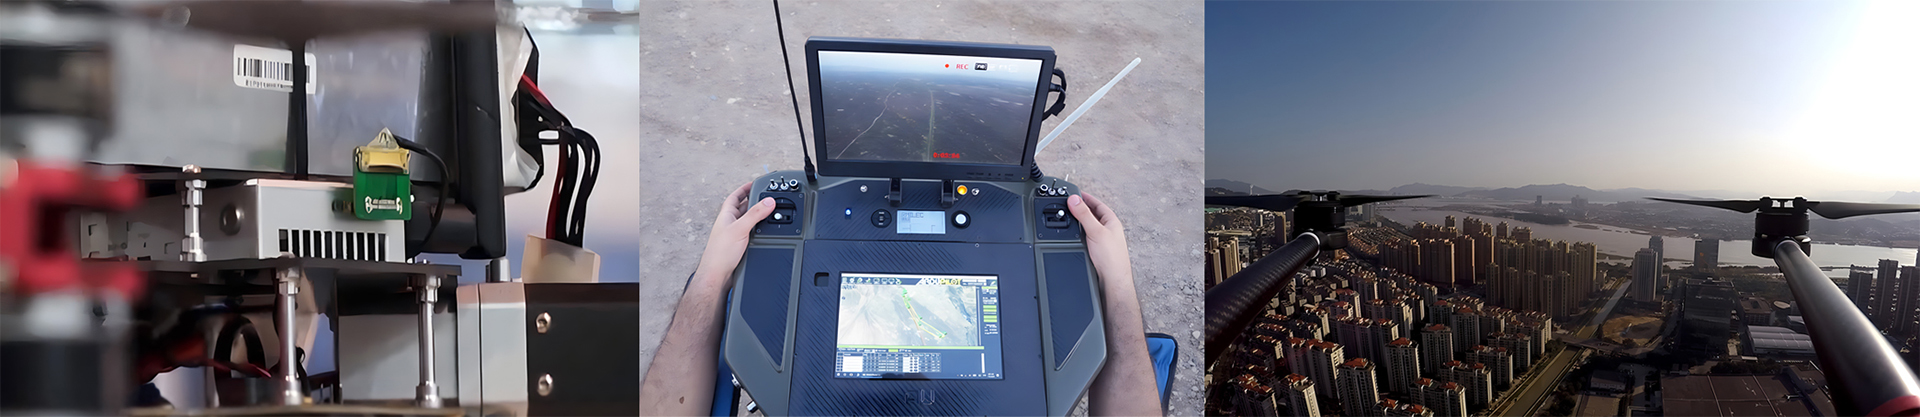 FIP2410-10km-UAV-Digital-video-sender-aplikasi-skenario